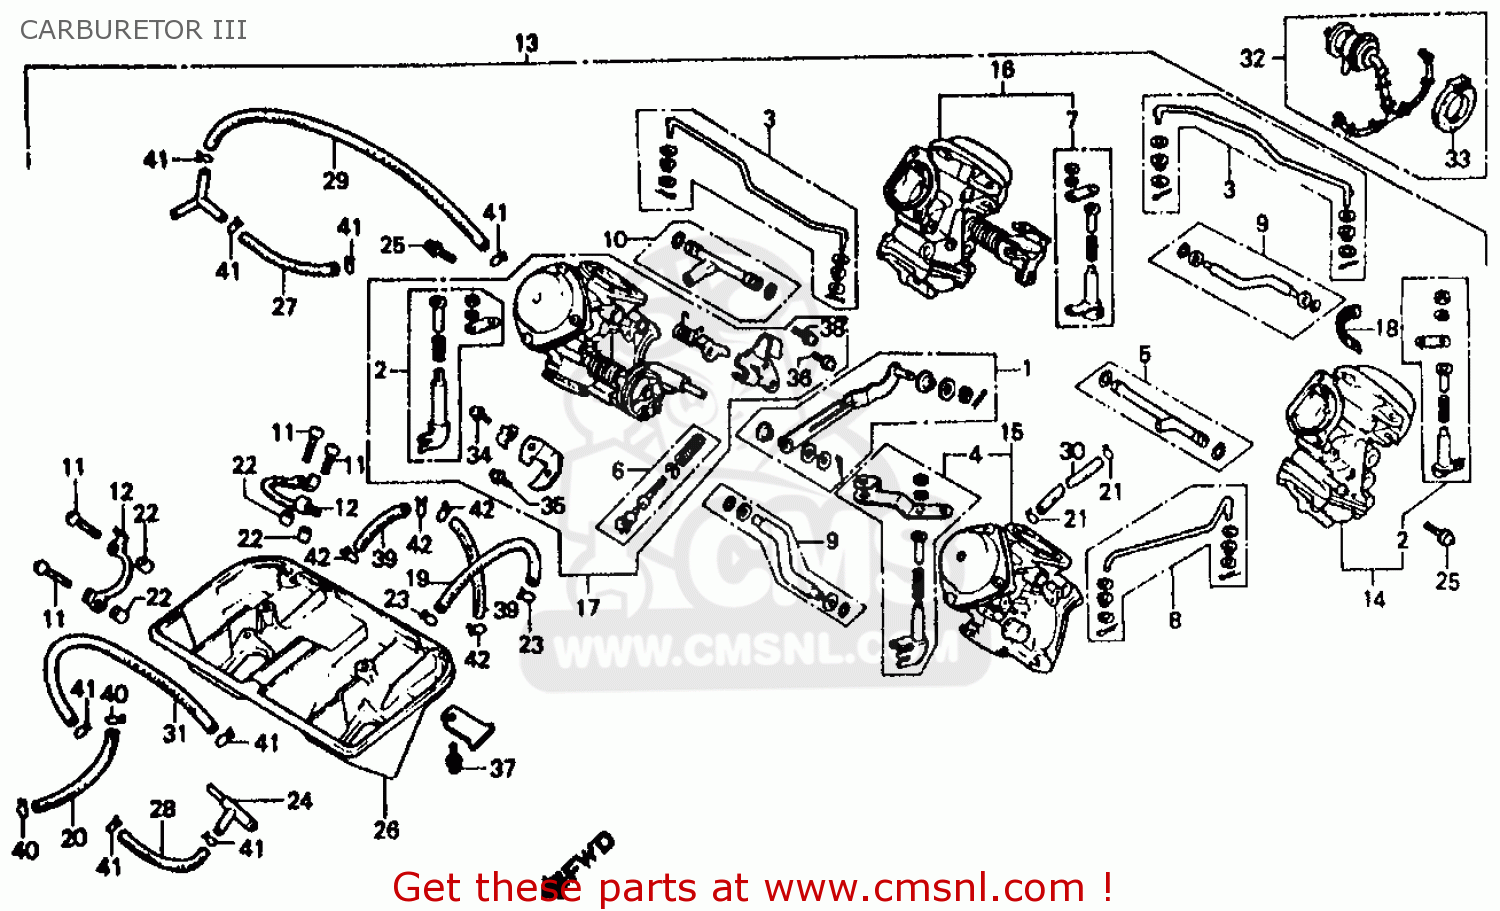 1985 Honda vf500 intercepter schematics #4